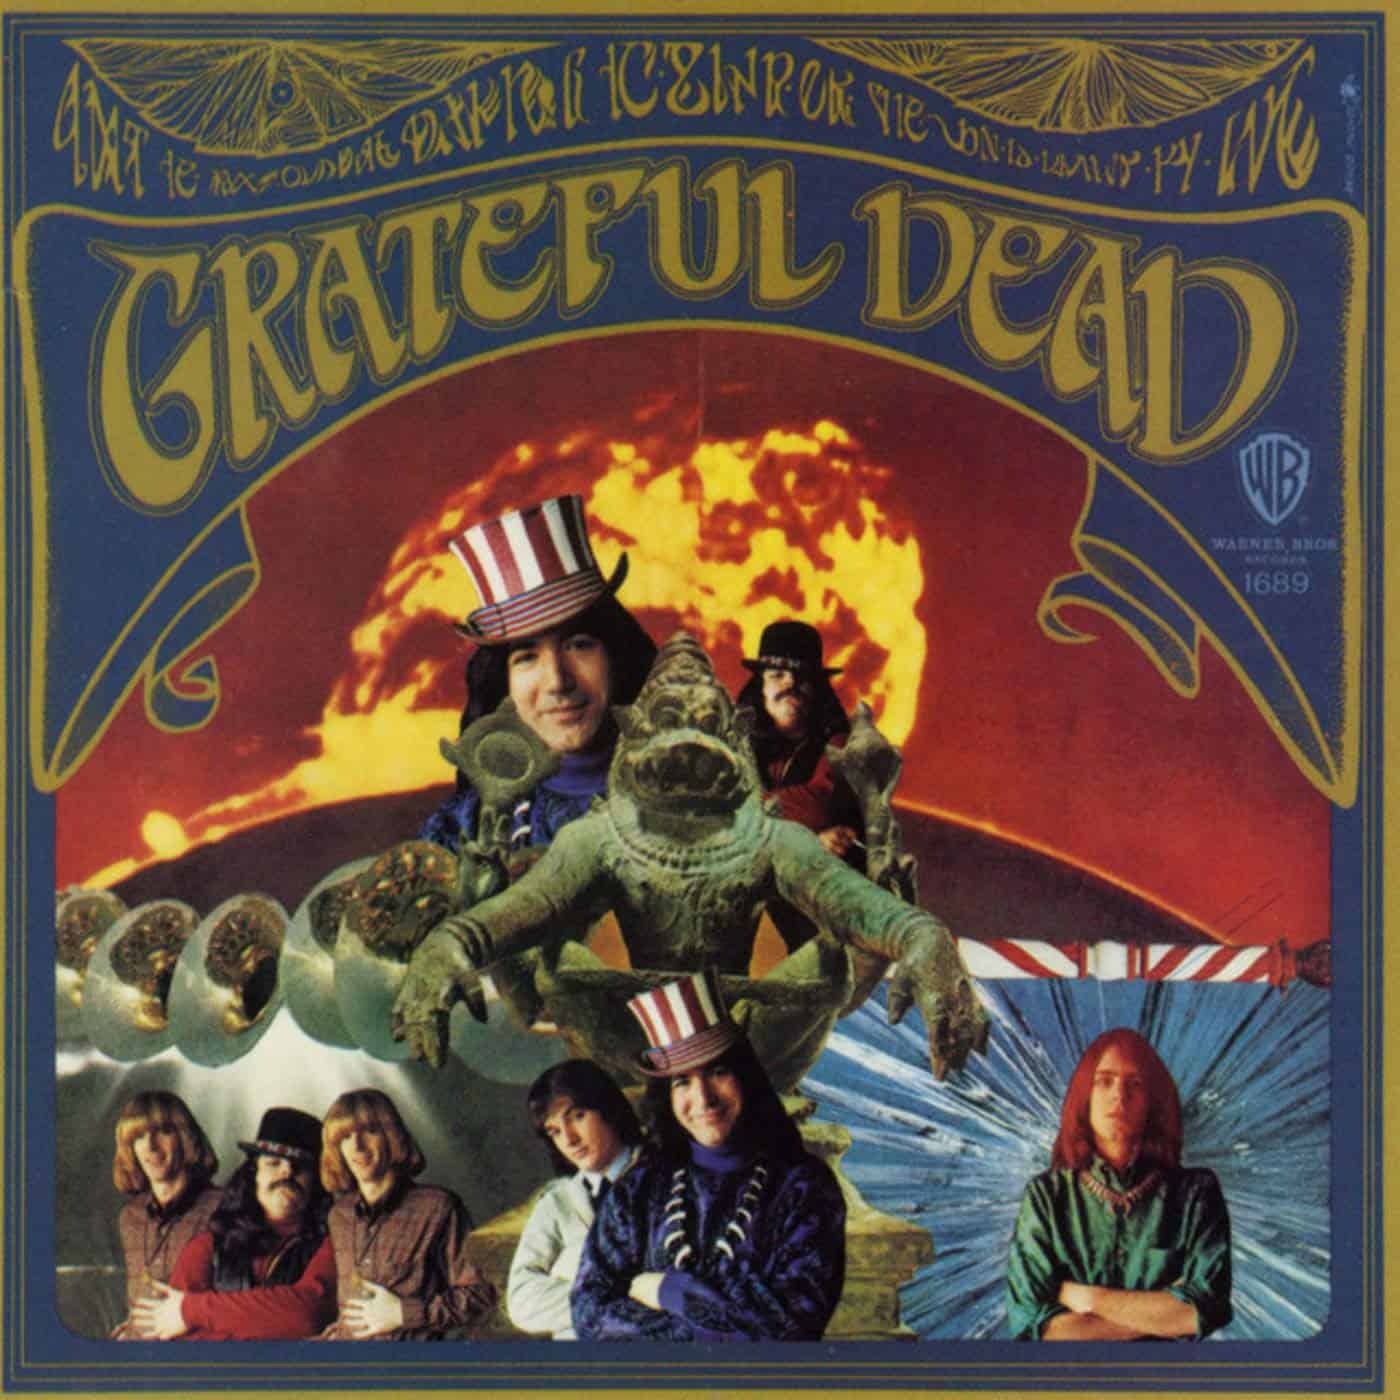 Grateful-Dead-First-Album-vinyl-record-front